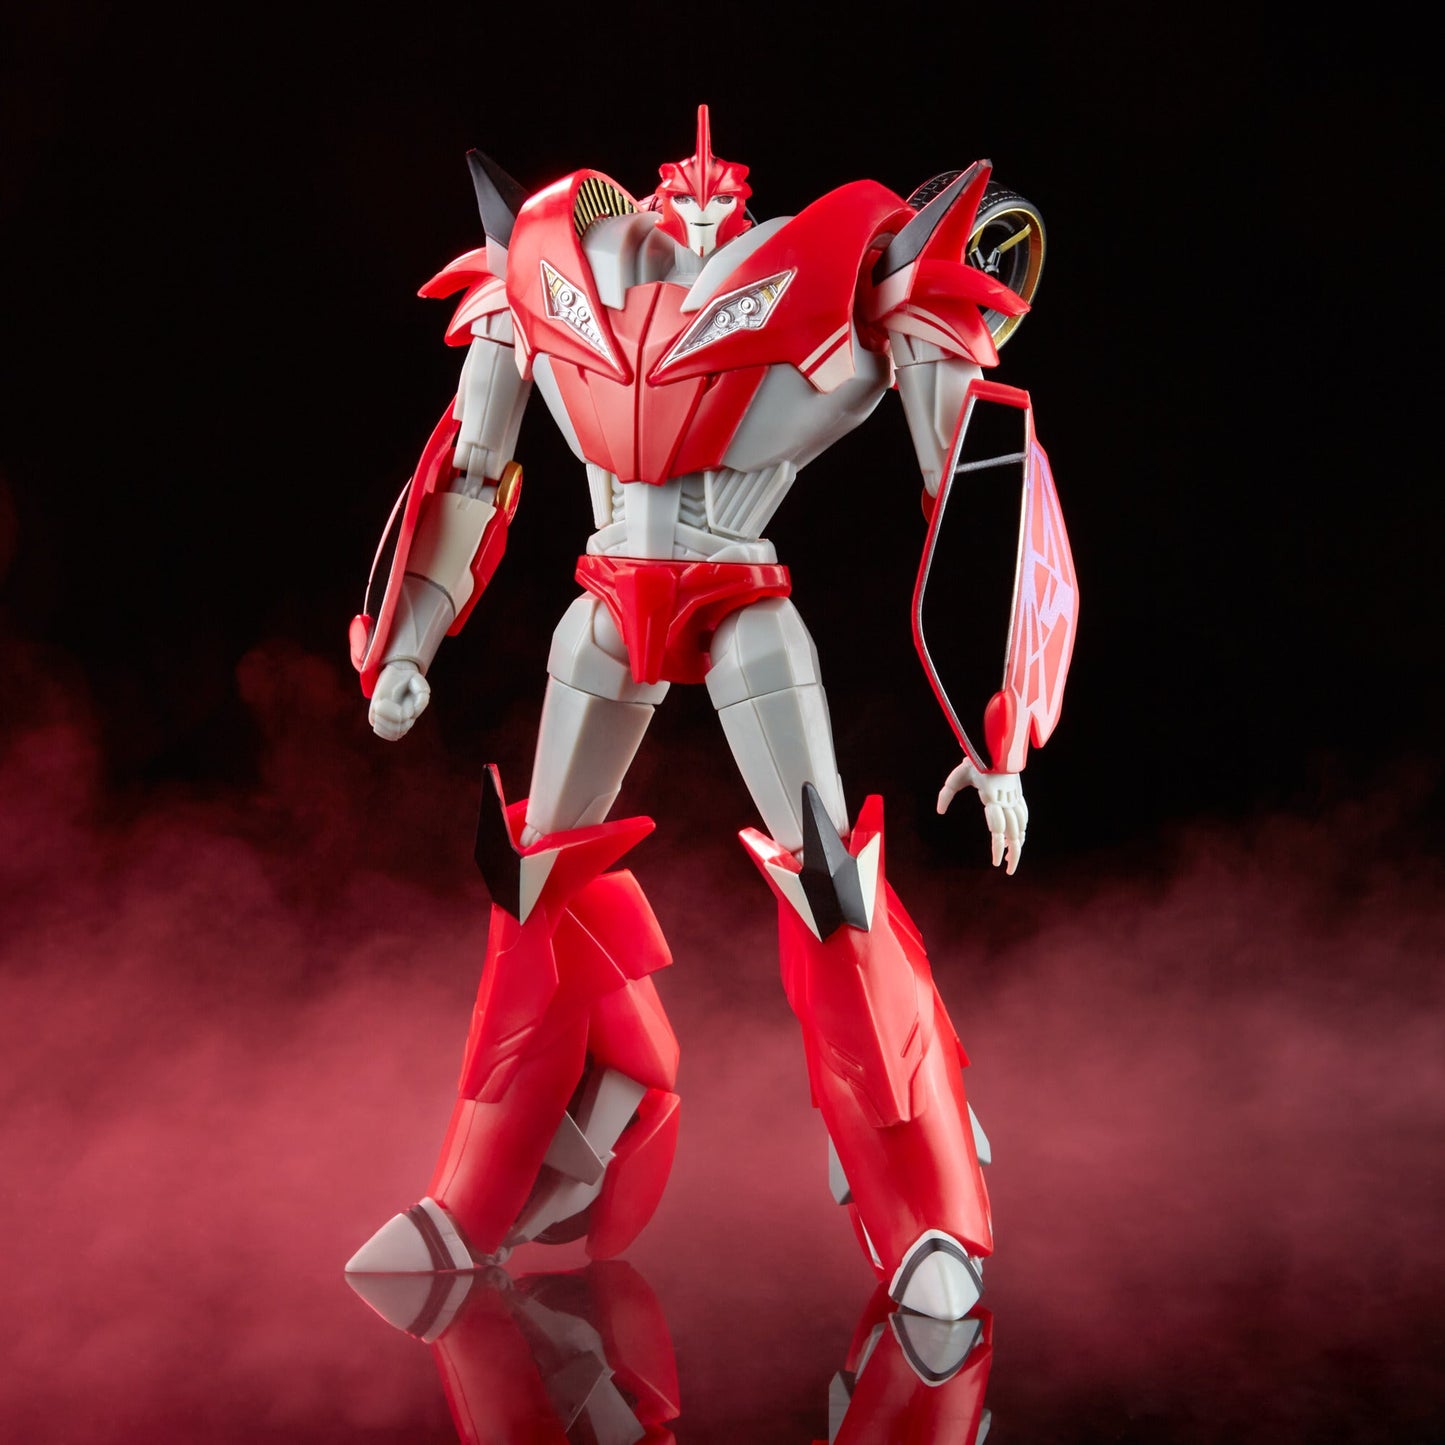 Transformers R.E.D. [Robot Enhanced Design] Transformers: Prime Knock Out - Walmart Exclusive